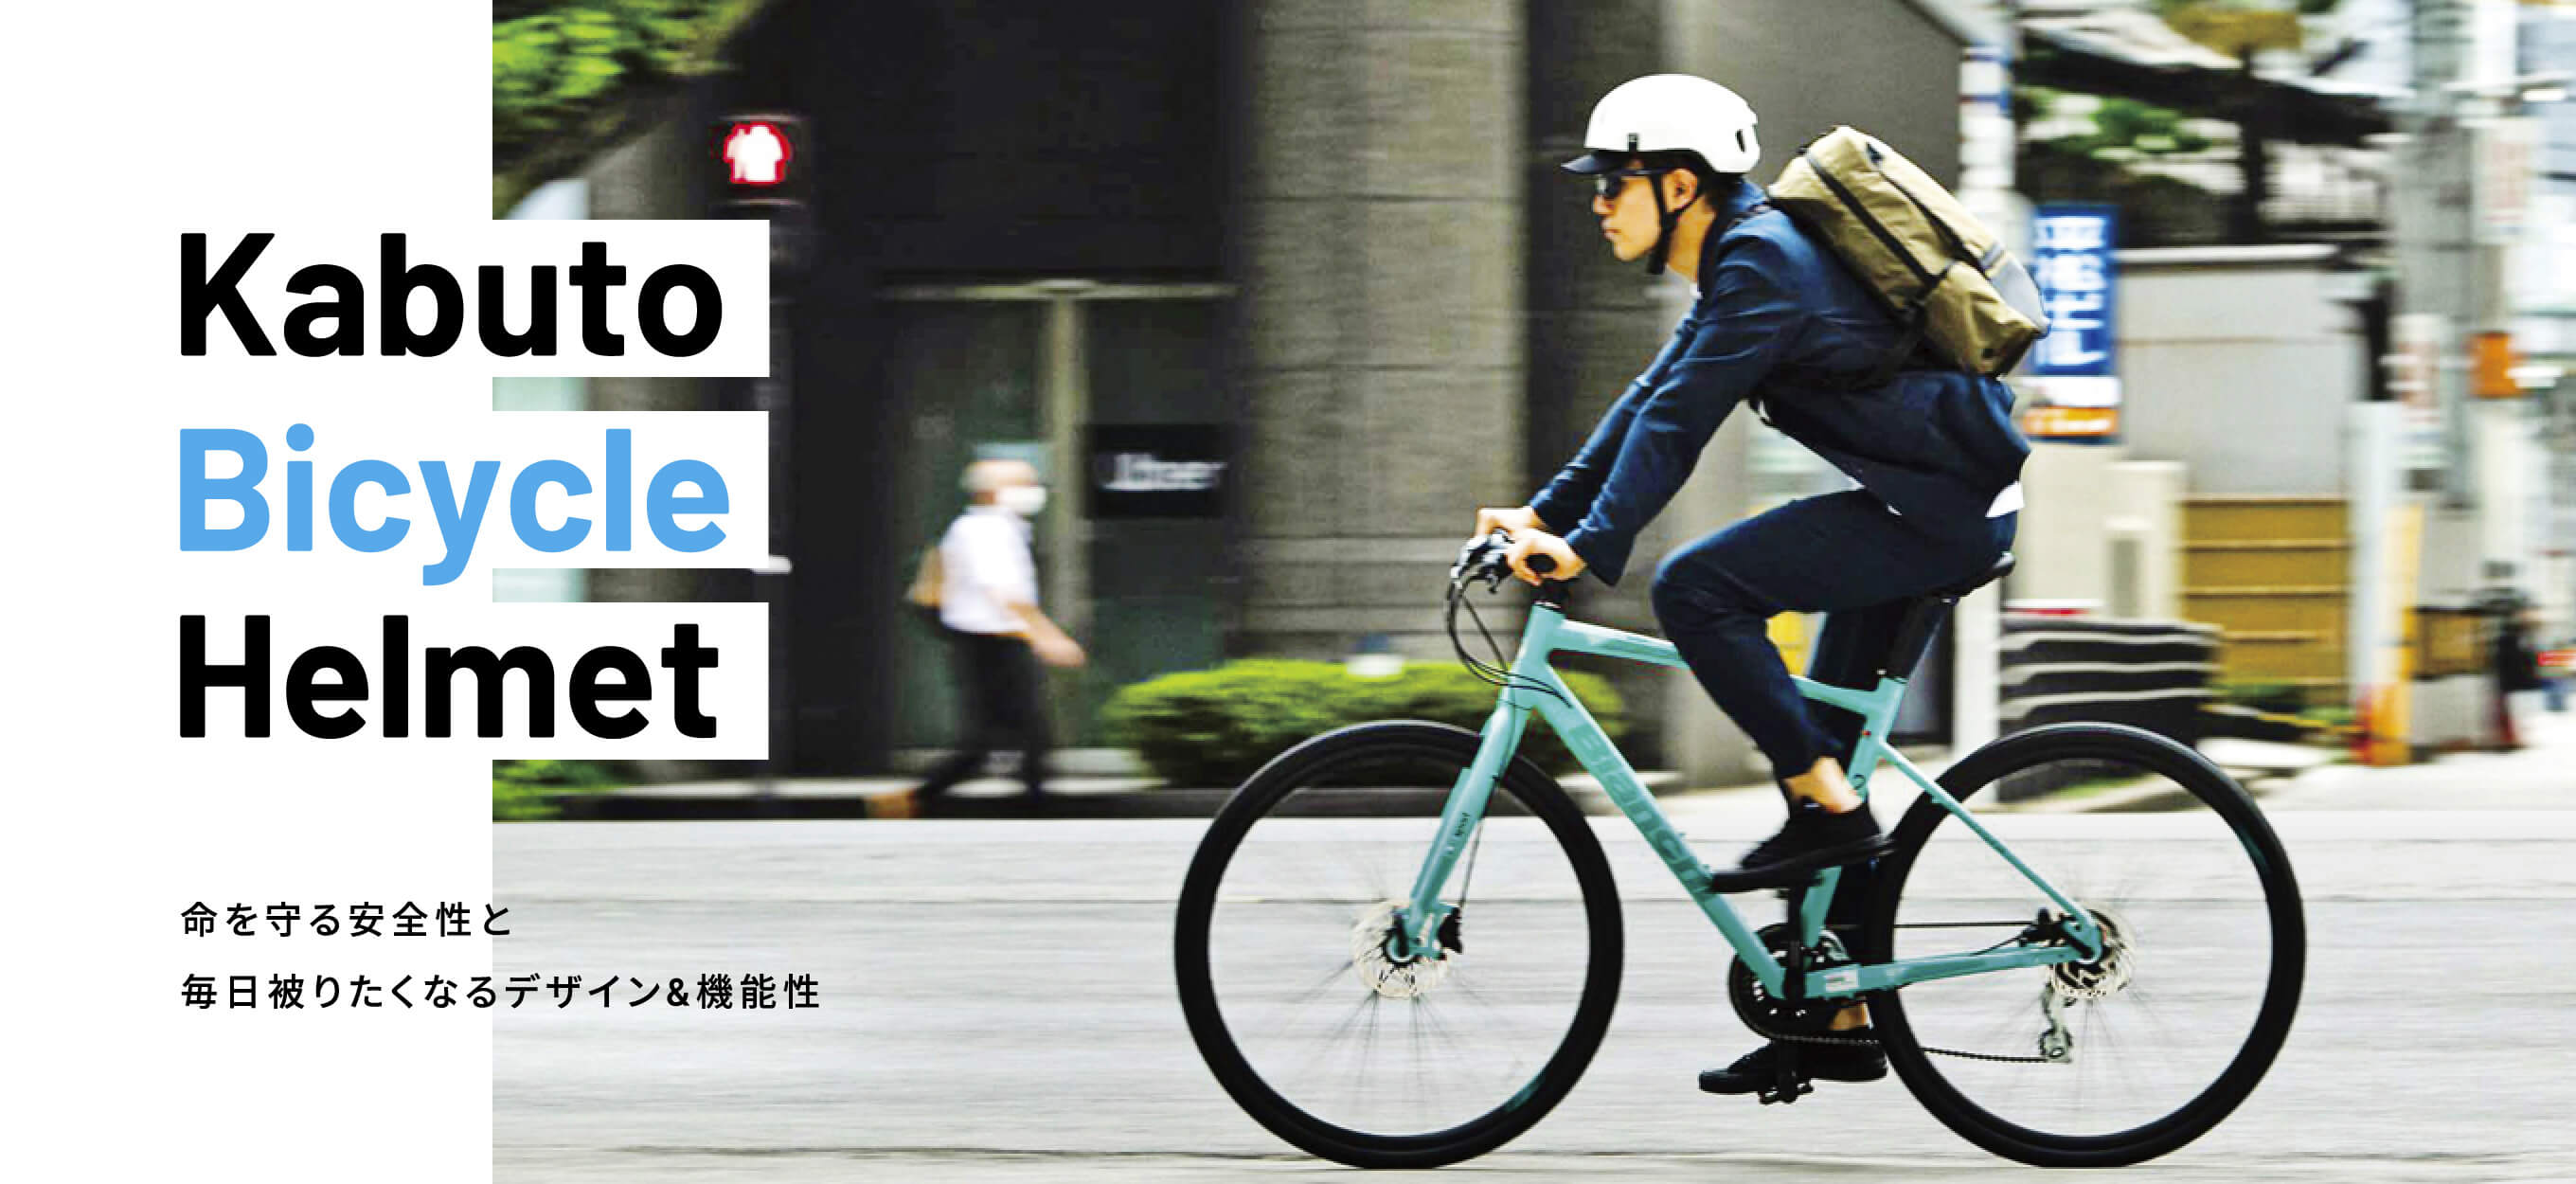 Kabuto Bicycle Helmet 命を守る安全性と毎日被りたくなるデザイン&機能性